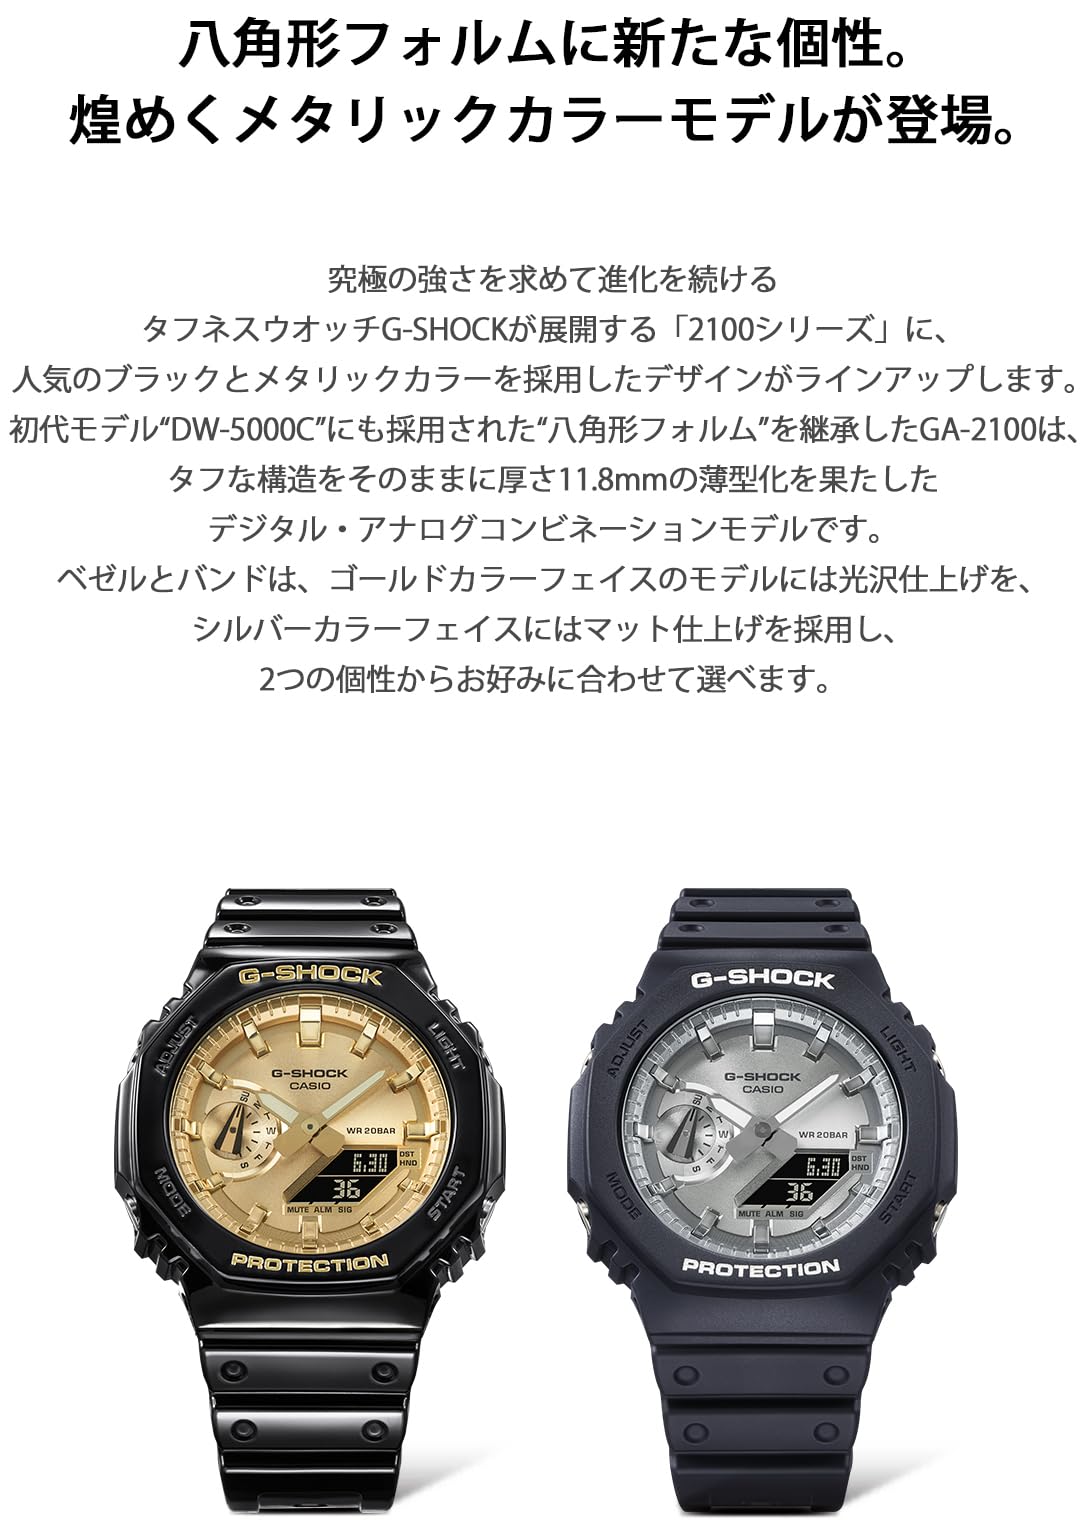 Casio GA-2100SB-1AJF [G-SHOCK (G-Shock) GA-2100 series color model] Watch Japan Import Aug 2023 Model